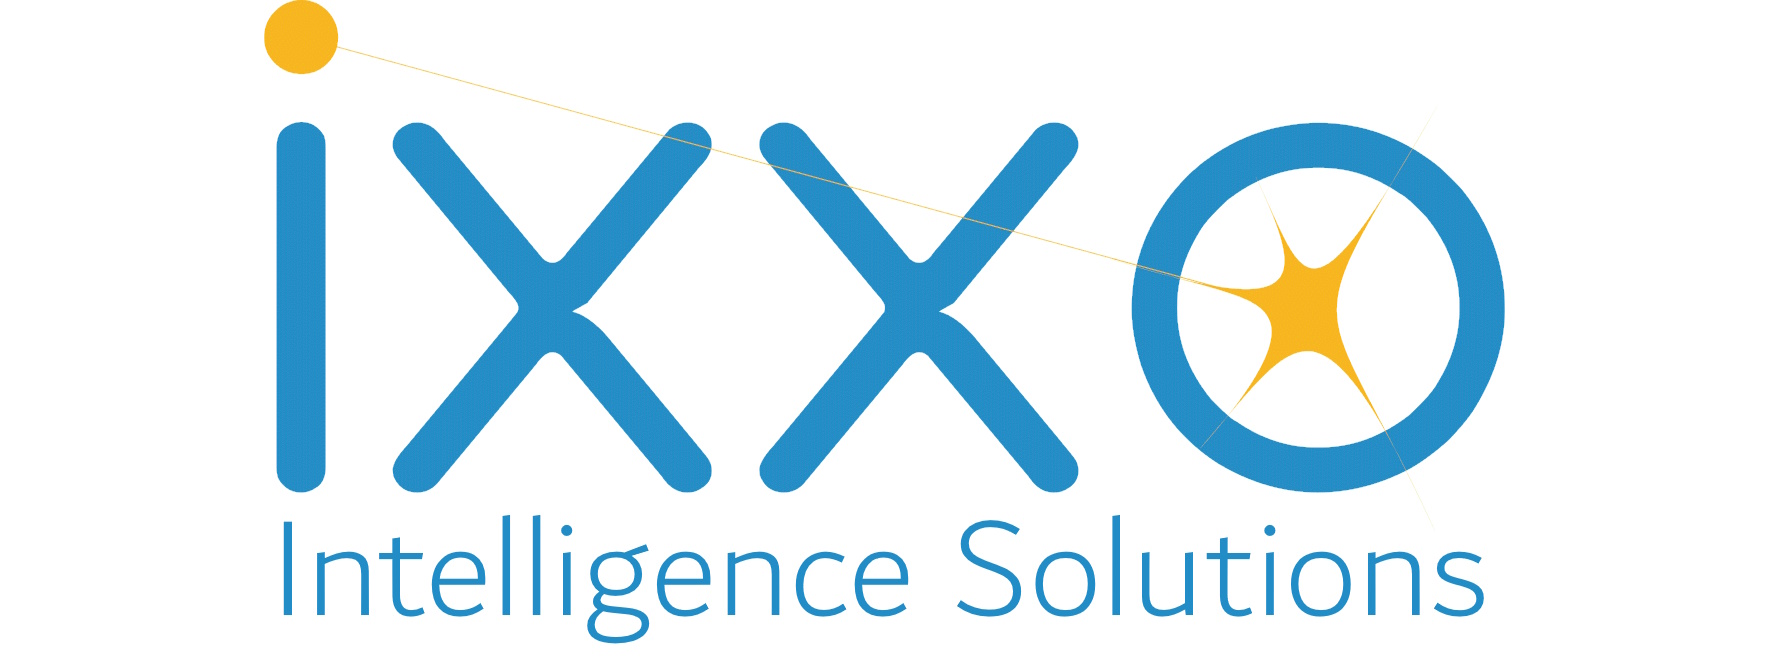 IXXO INTELLIGENCE SOLUTIONS